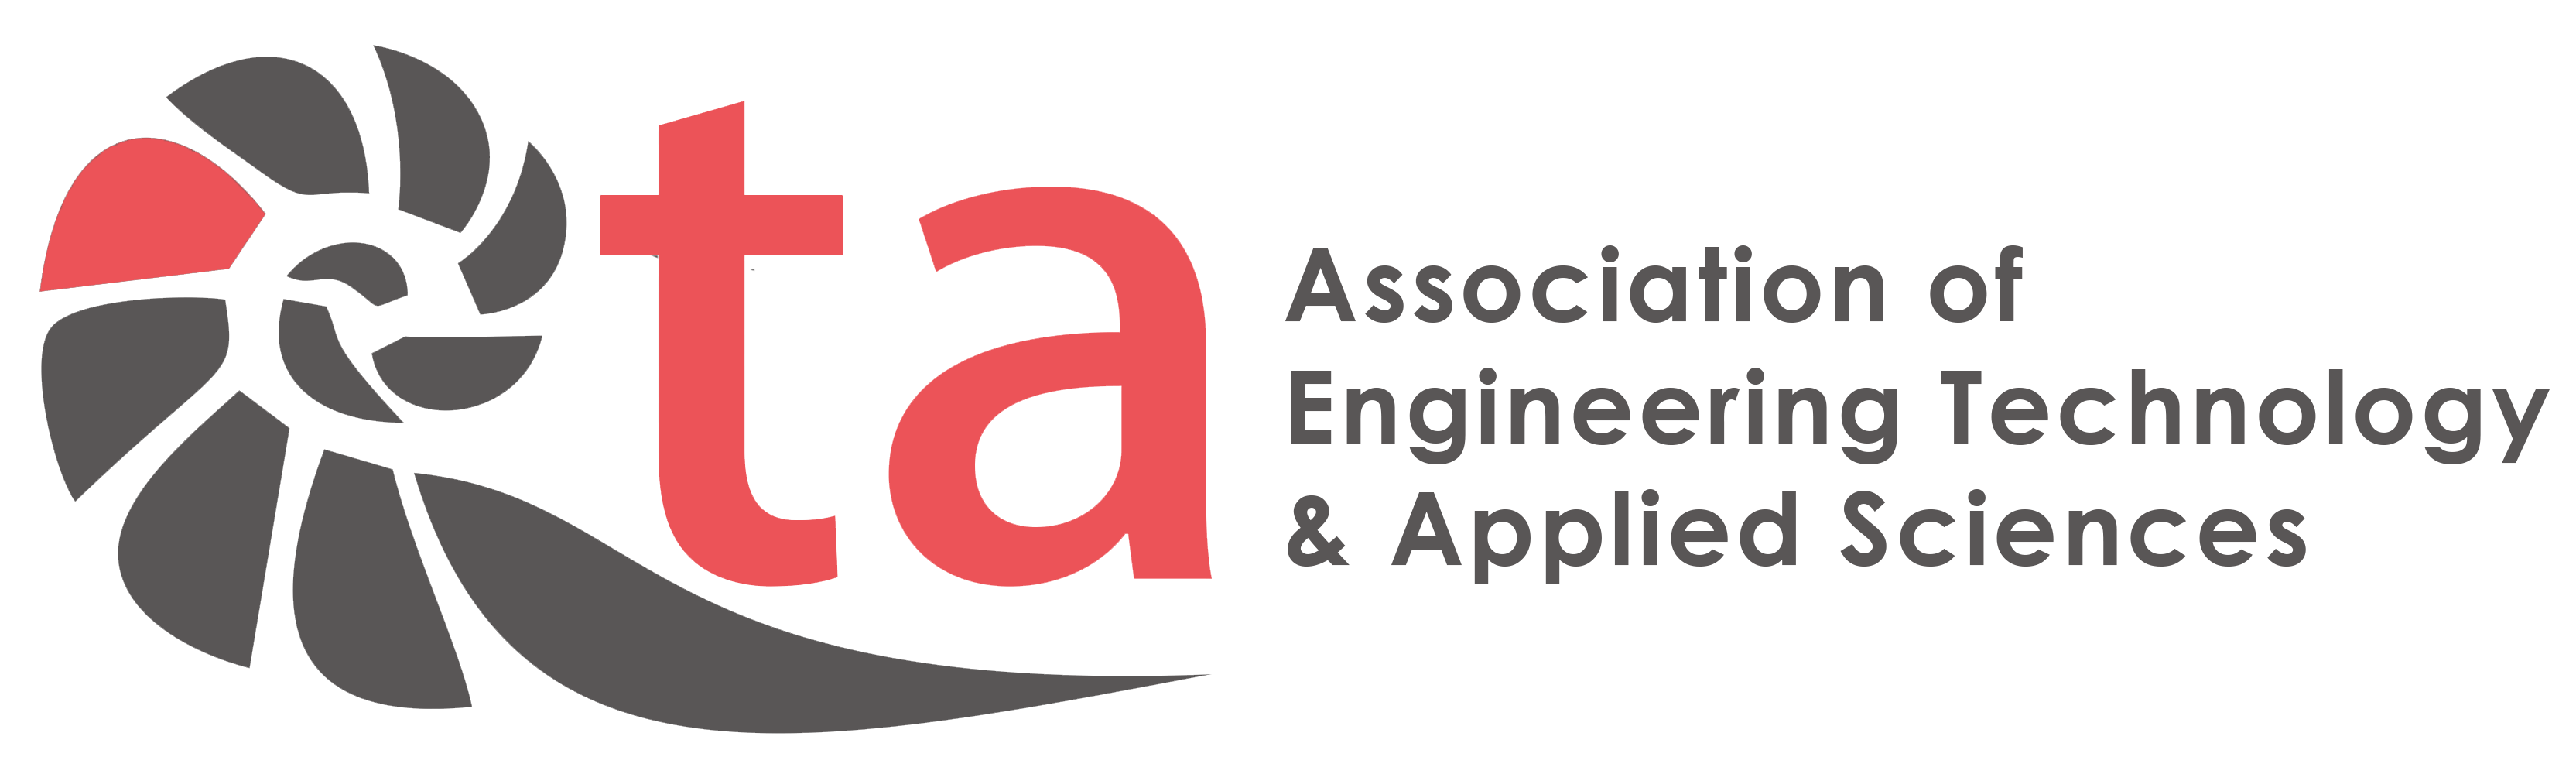 AETA International Conference on Nanotechnology, Robotics, Smart Material, Engineering & Applied Sciences  (NRSEA)